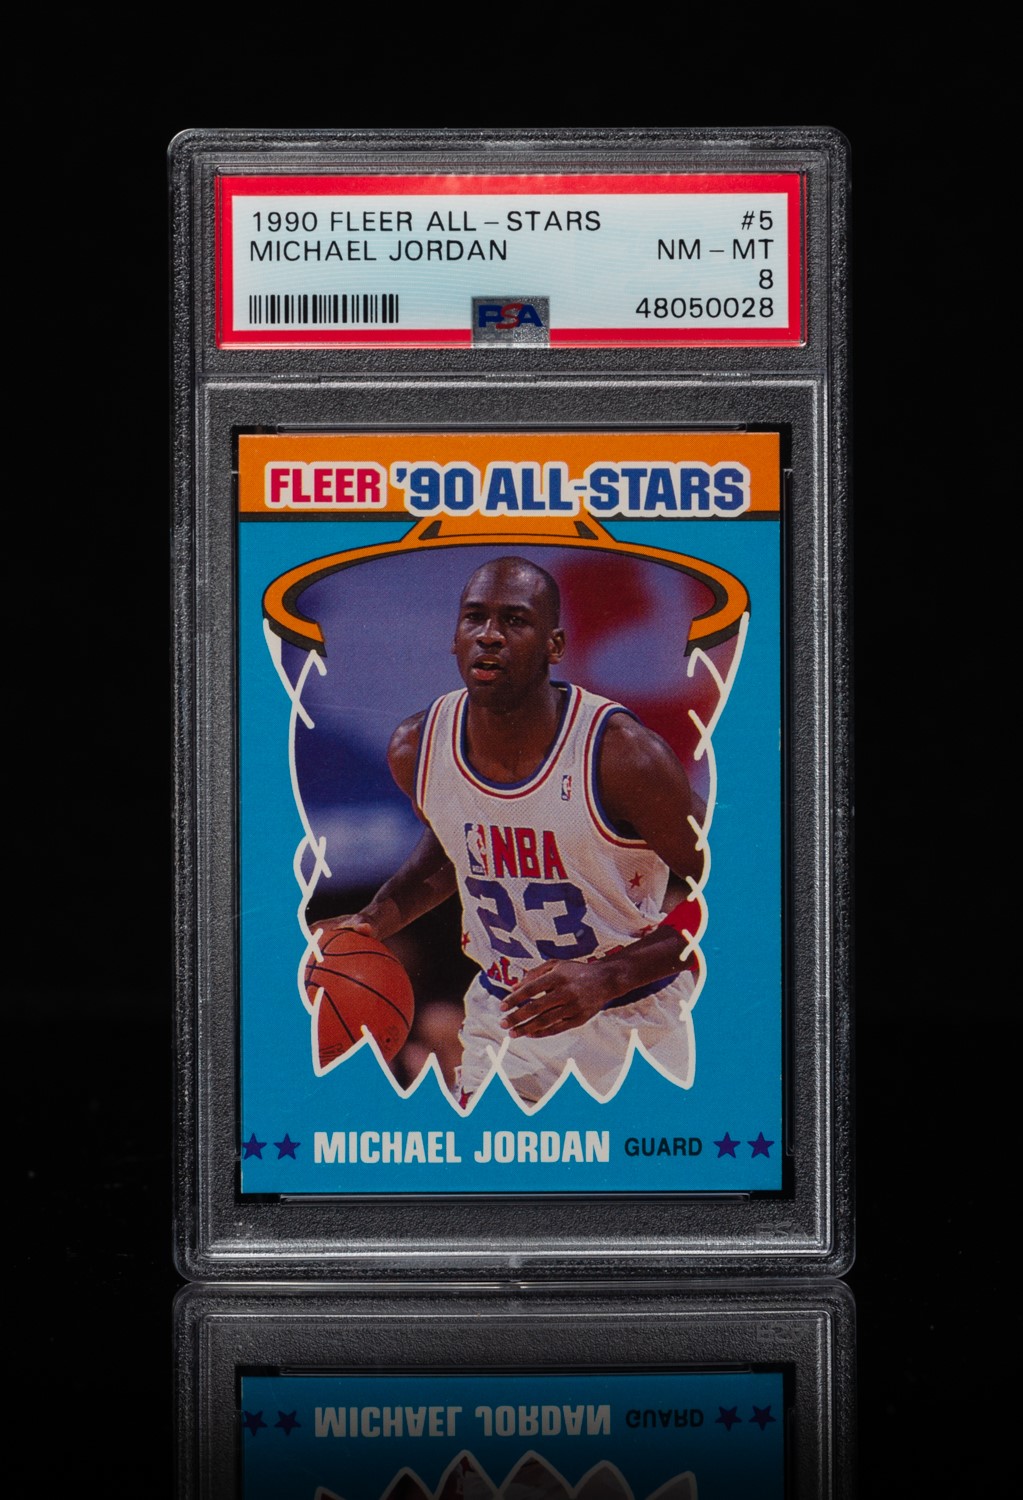 1990 Fleer All-Stars Michael Jordan Card #5 Graded NM-MT 8